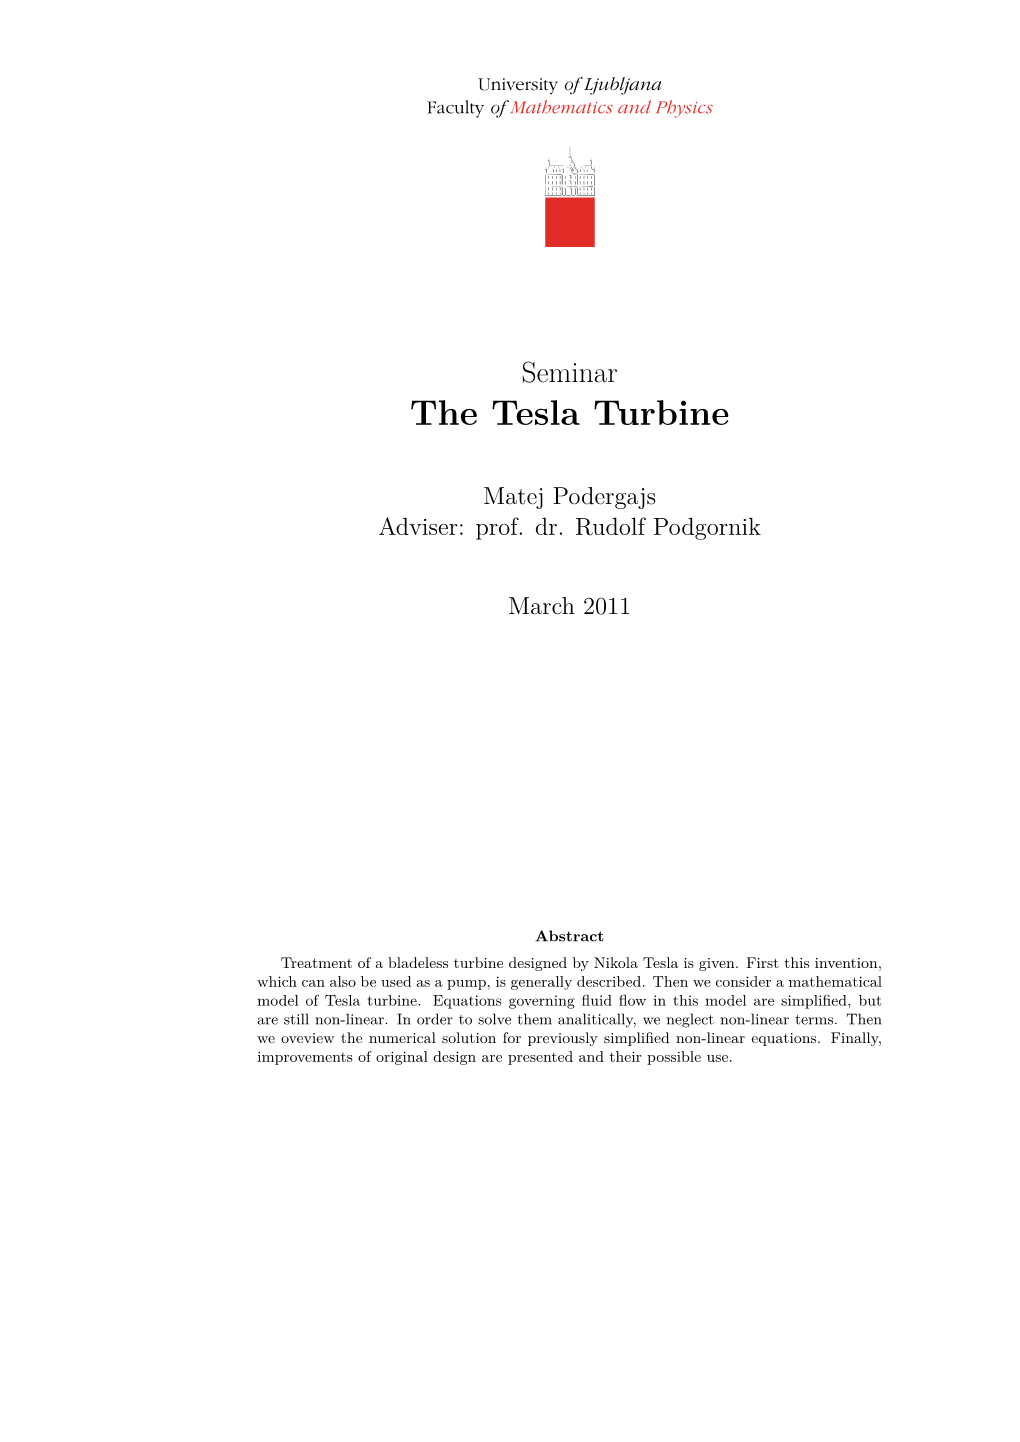 The Tesla Turbine